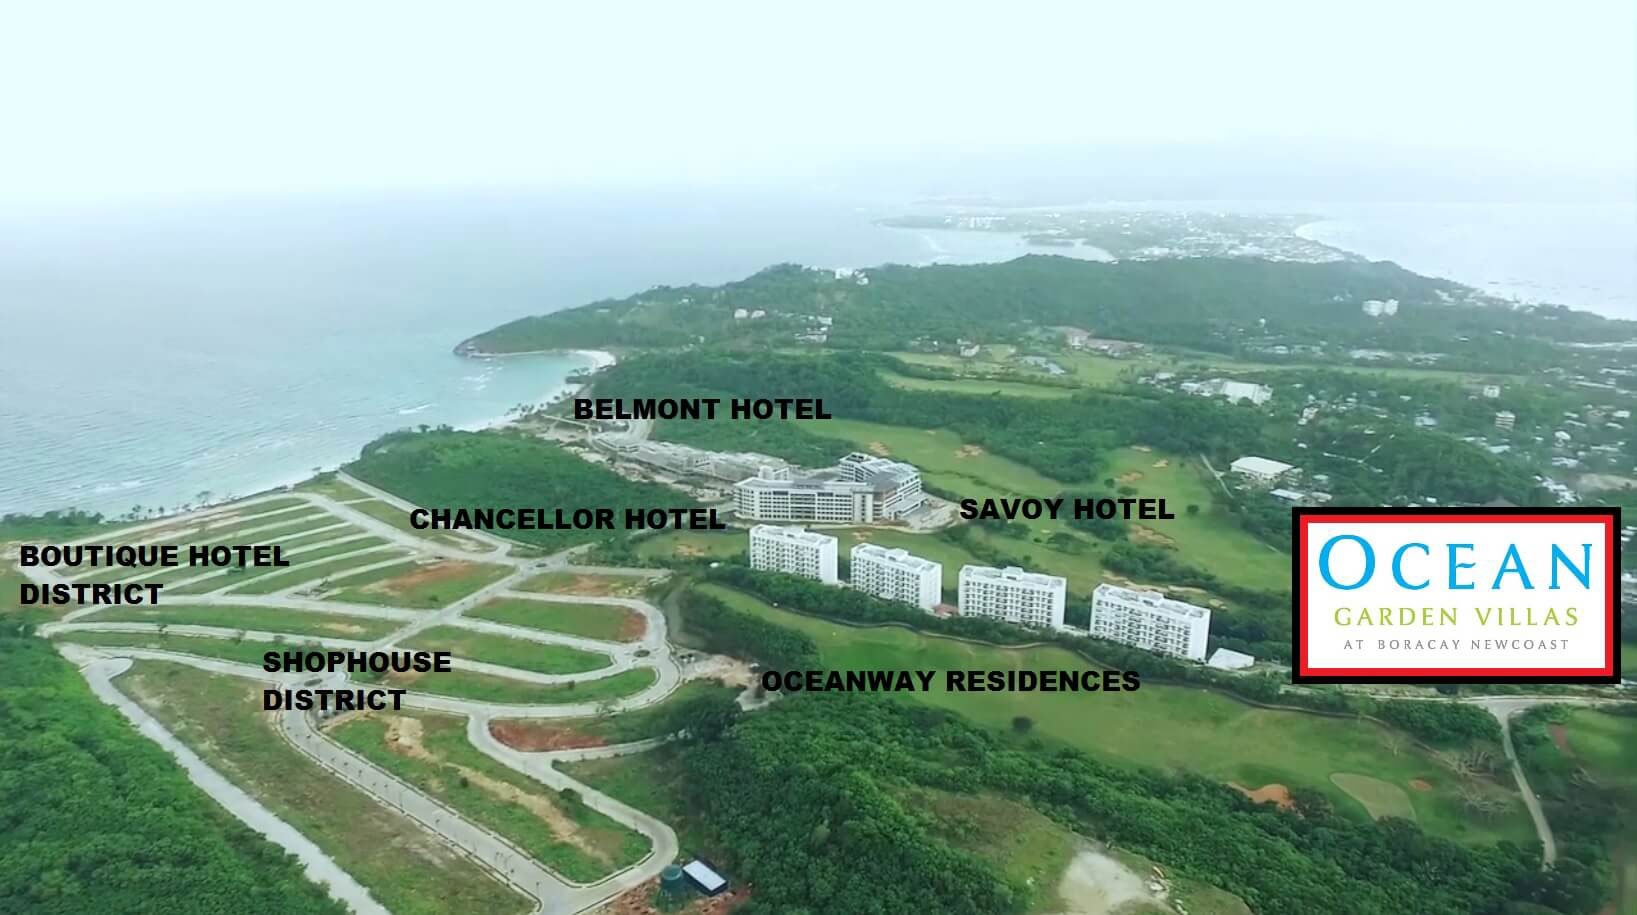 https://megaworldfort.com.ph/wp-content/uploads/2018/10/ocean-garden-villas-site-development-plan.jpg